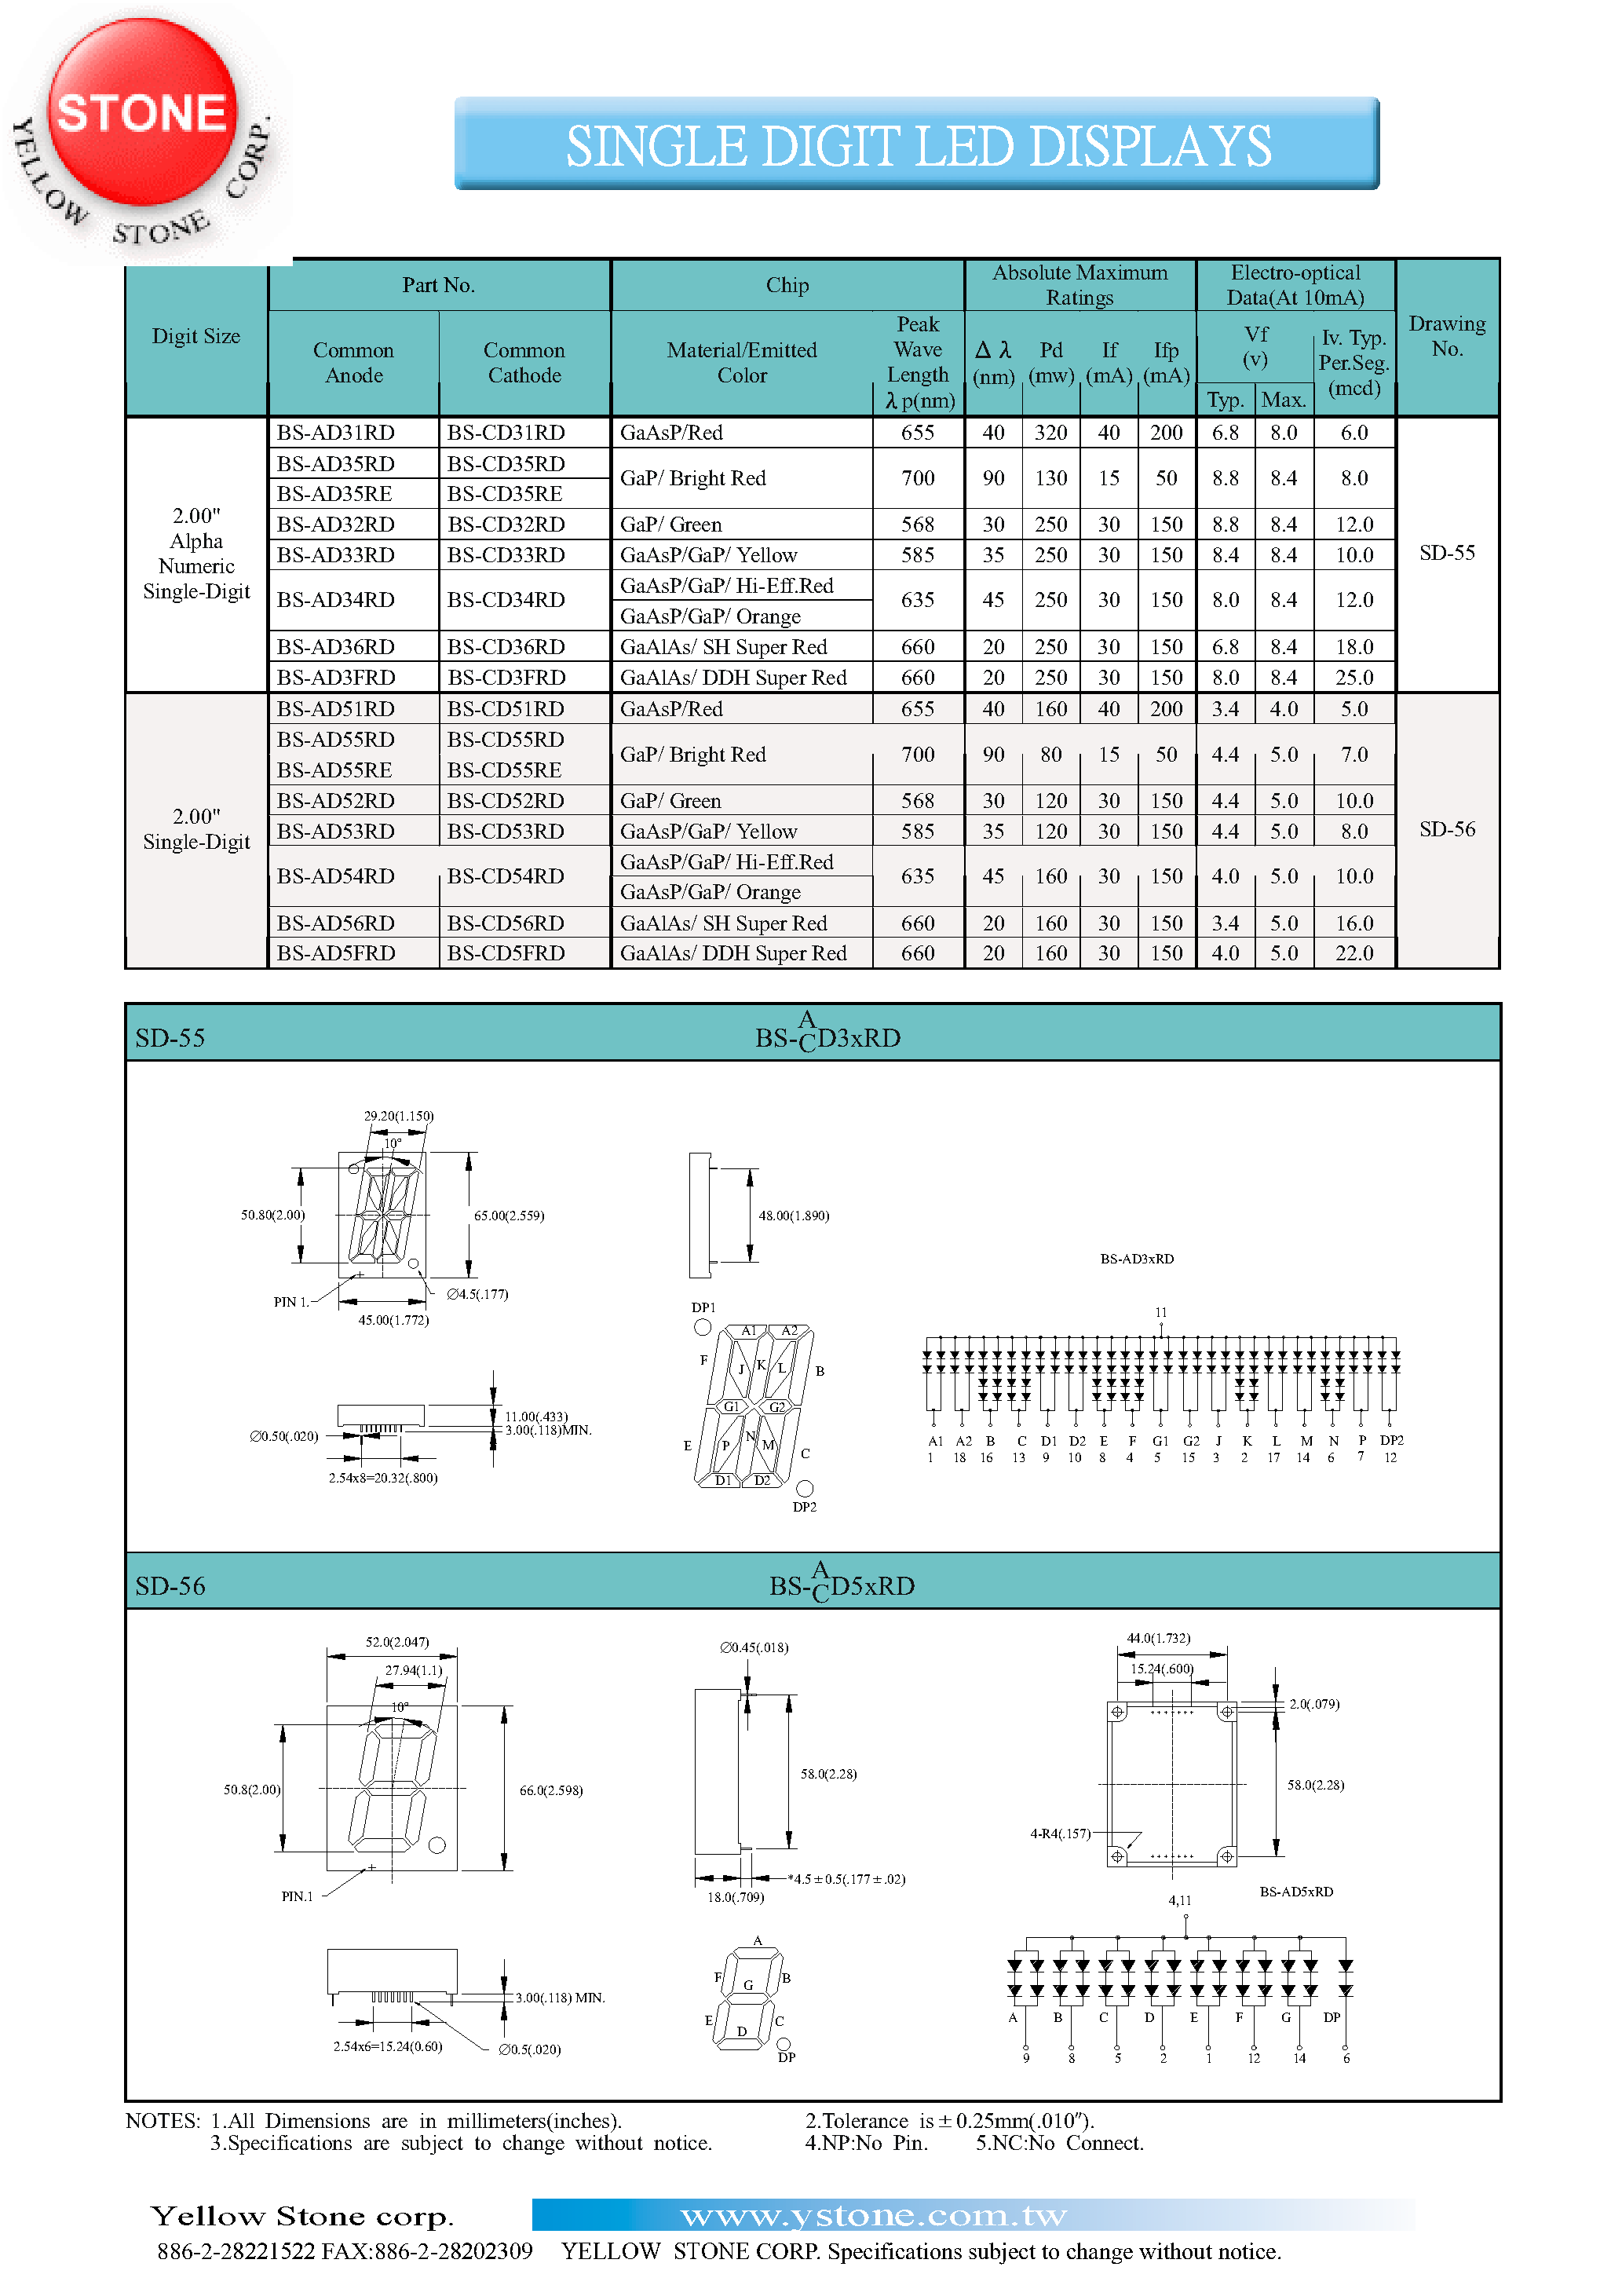 Datasheet BS-AD54RD - SINGLE DIGIT LED DISPLAYS page 1